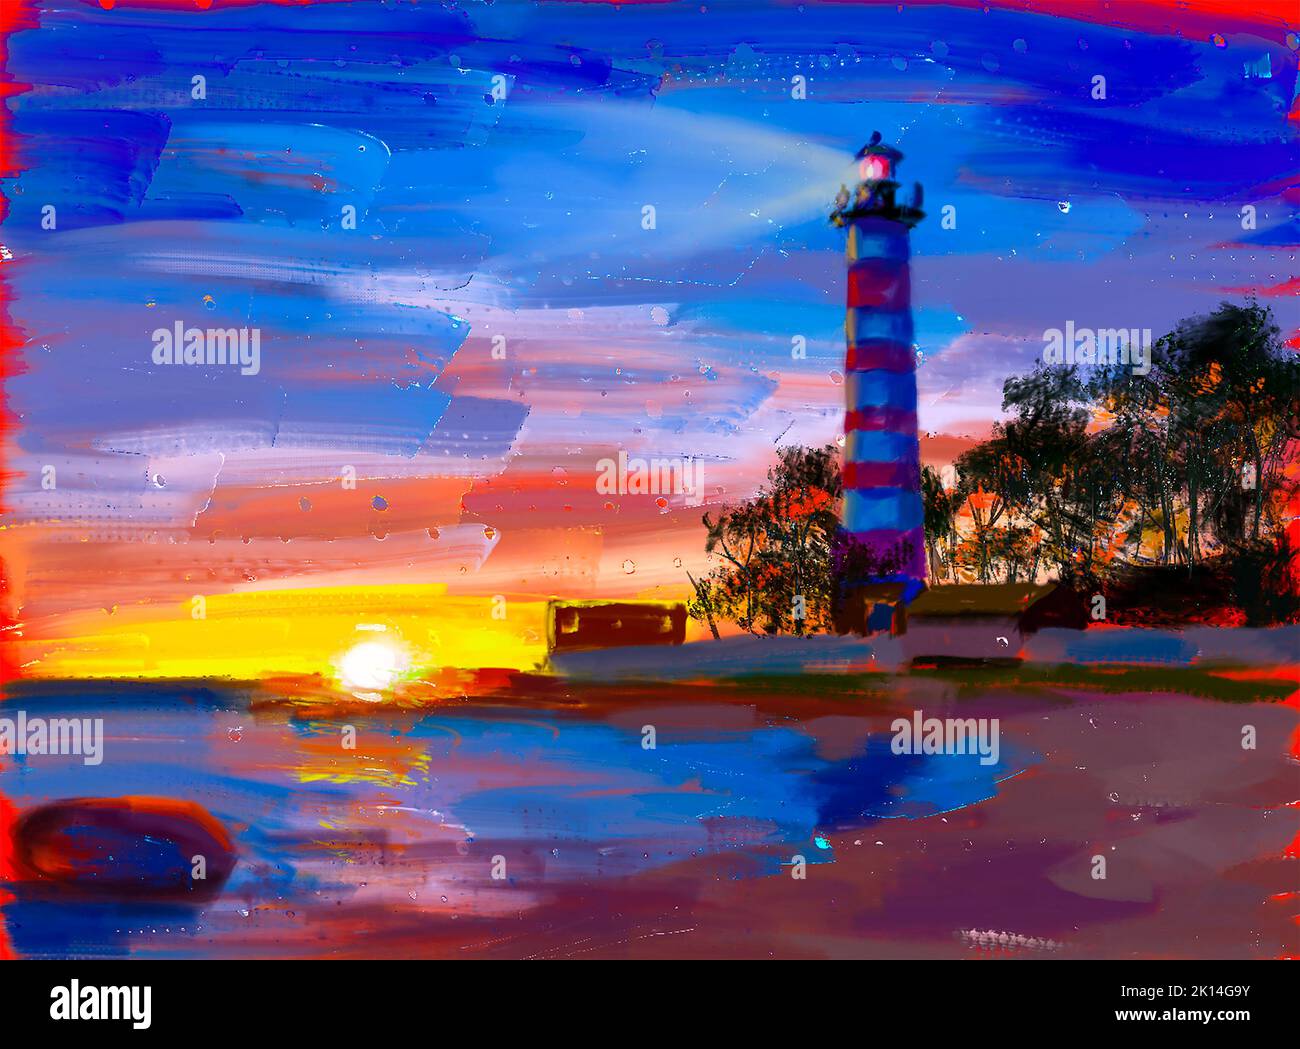 Lighthouse sea at sunset landscape. Oil painting on canvas. Impressionsm style art Stock Photo